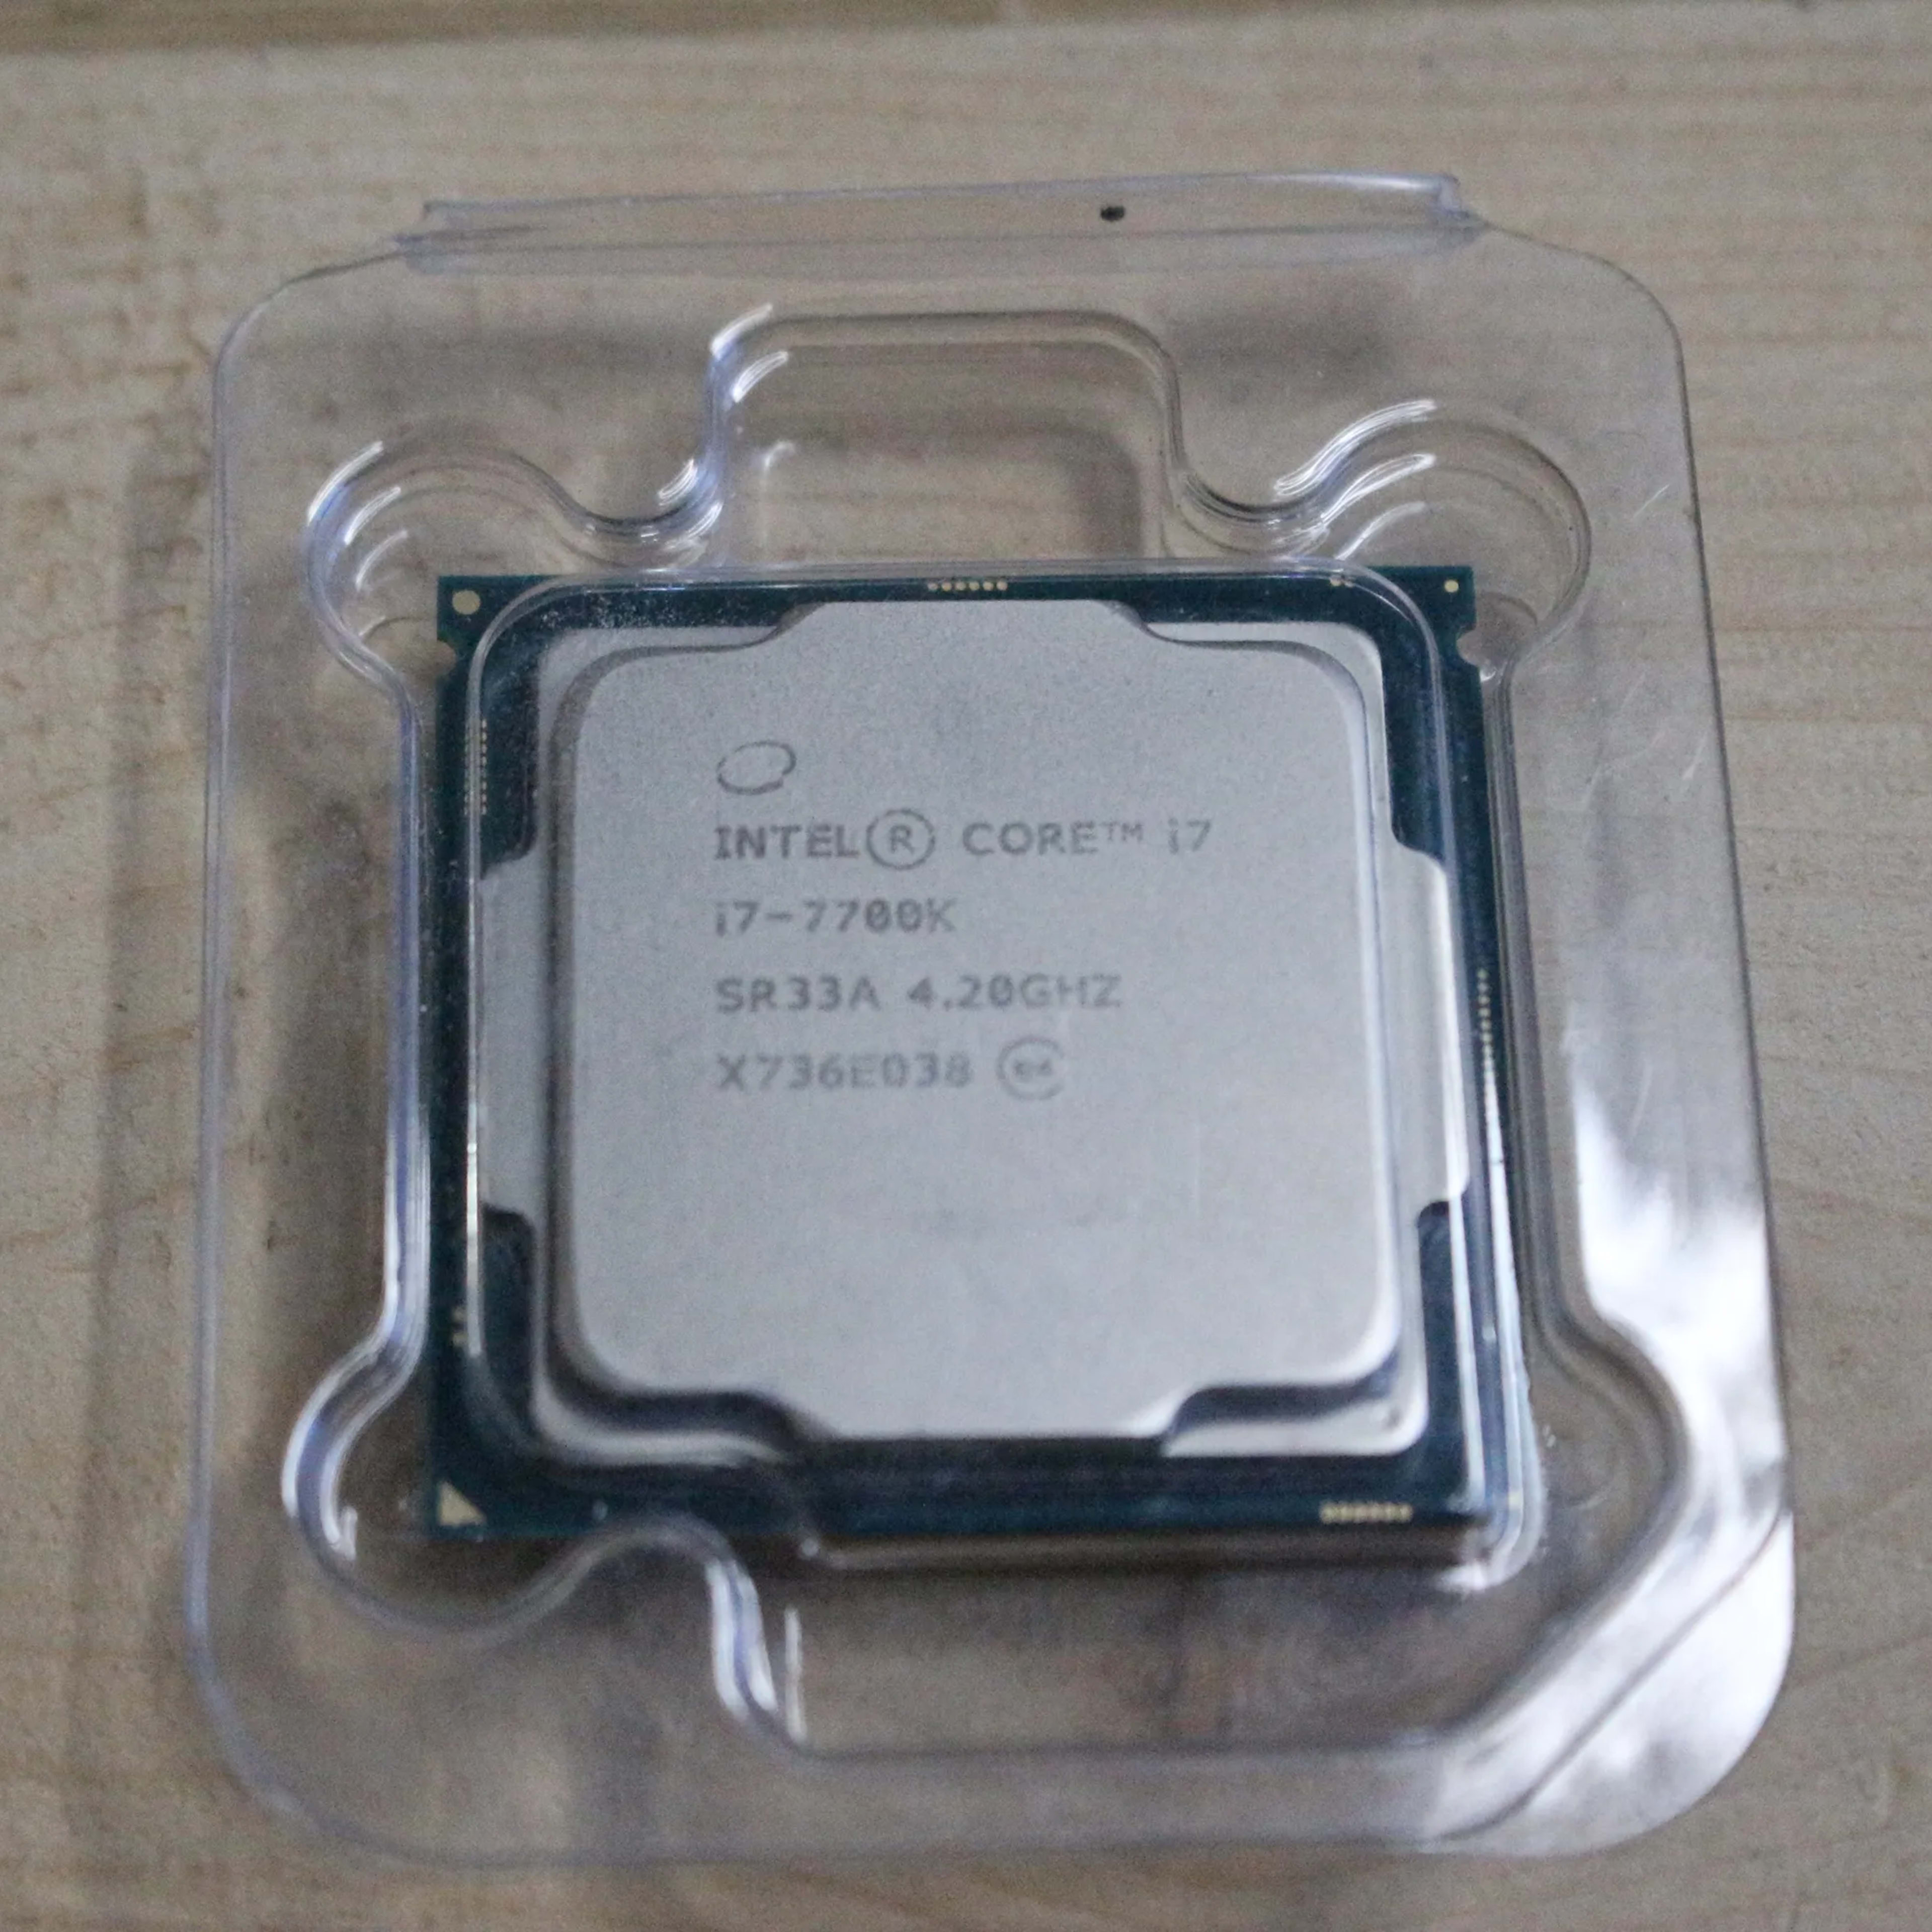 Intel Core i7-7700K | 4 Cores 8 Threads @4.20GHz | Jawa